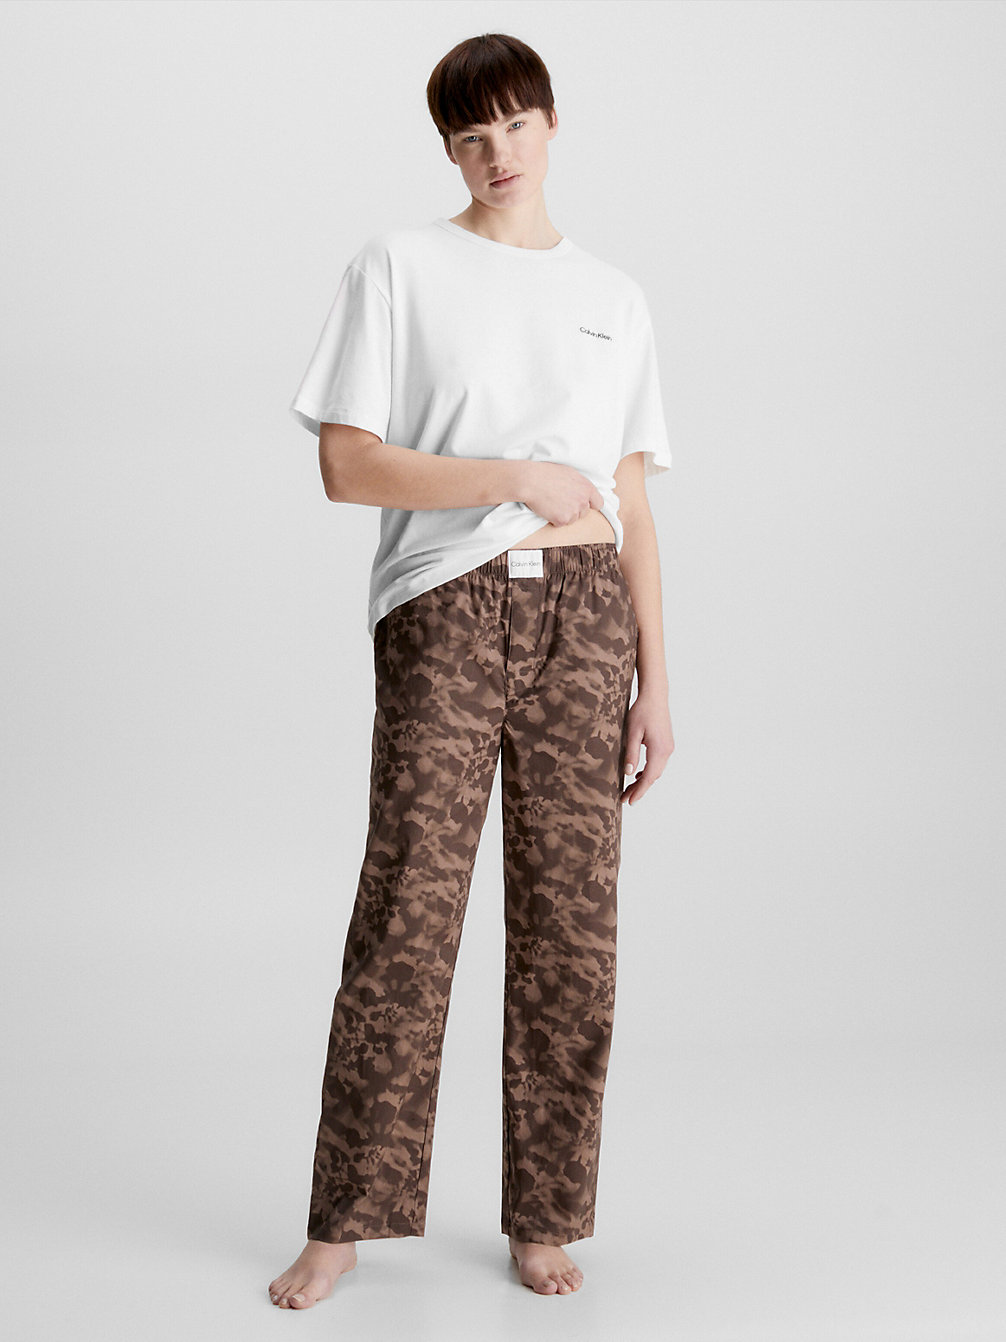 FLORAL SHADOWS/MAUVE Pyjama-Set - Pj In A Bag undefined Damen Calvin Klein